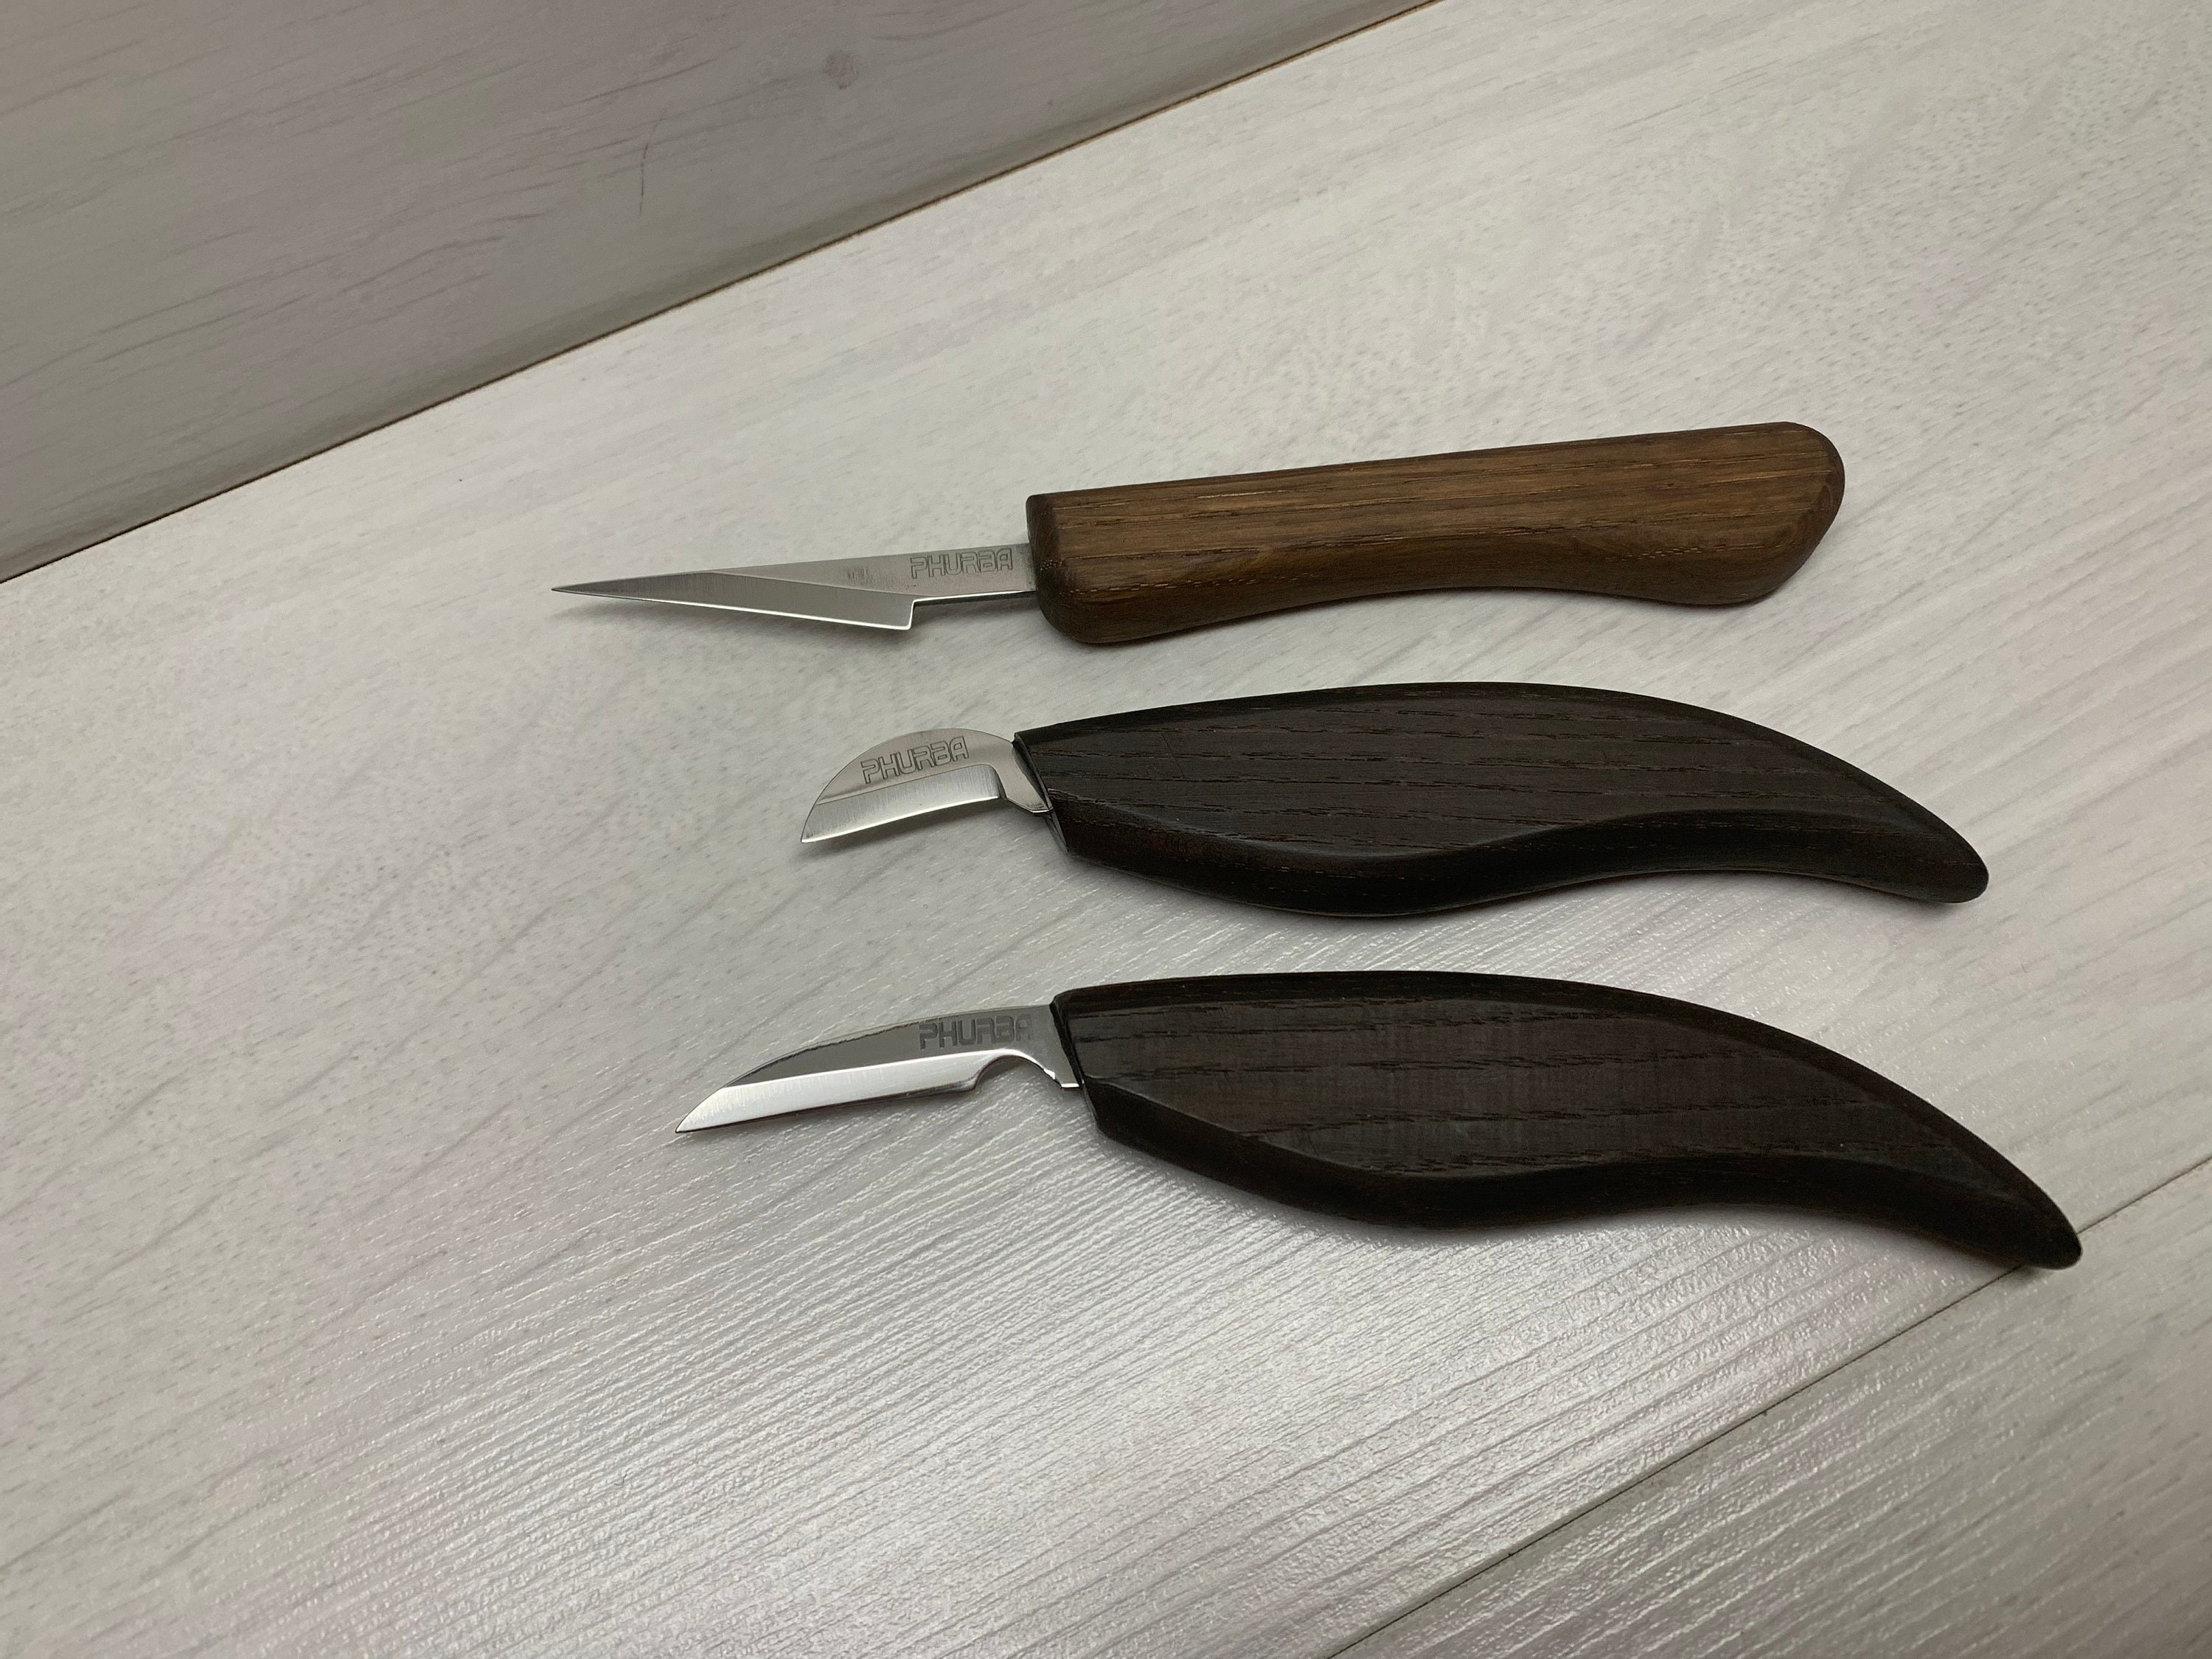 3pcs Woodworking Wood Carving Kit Set Diy Wood Carving Knife